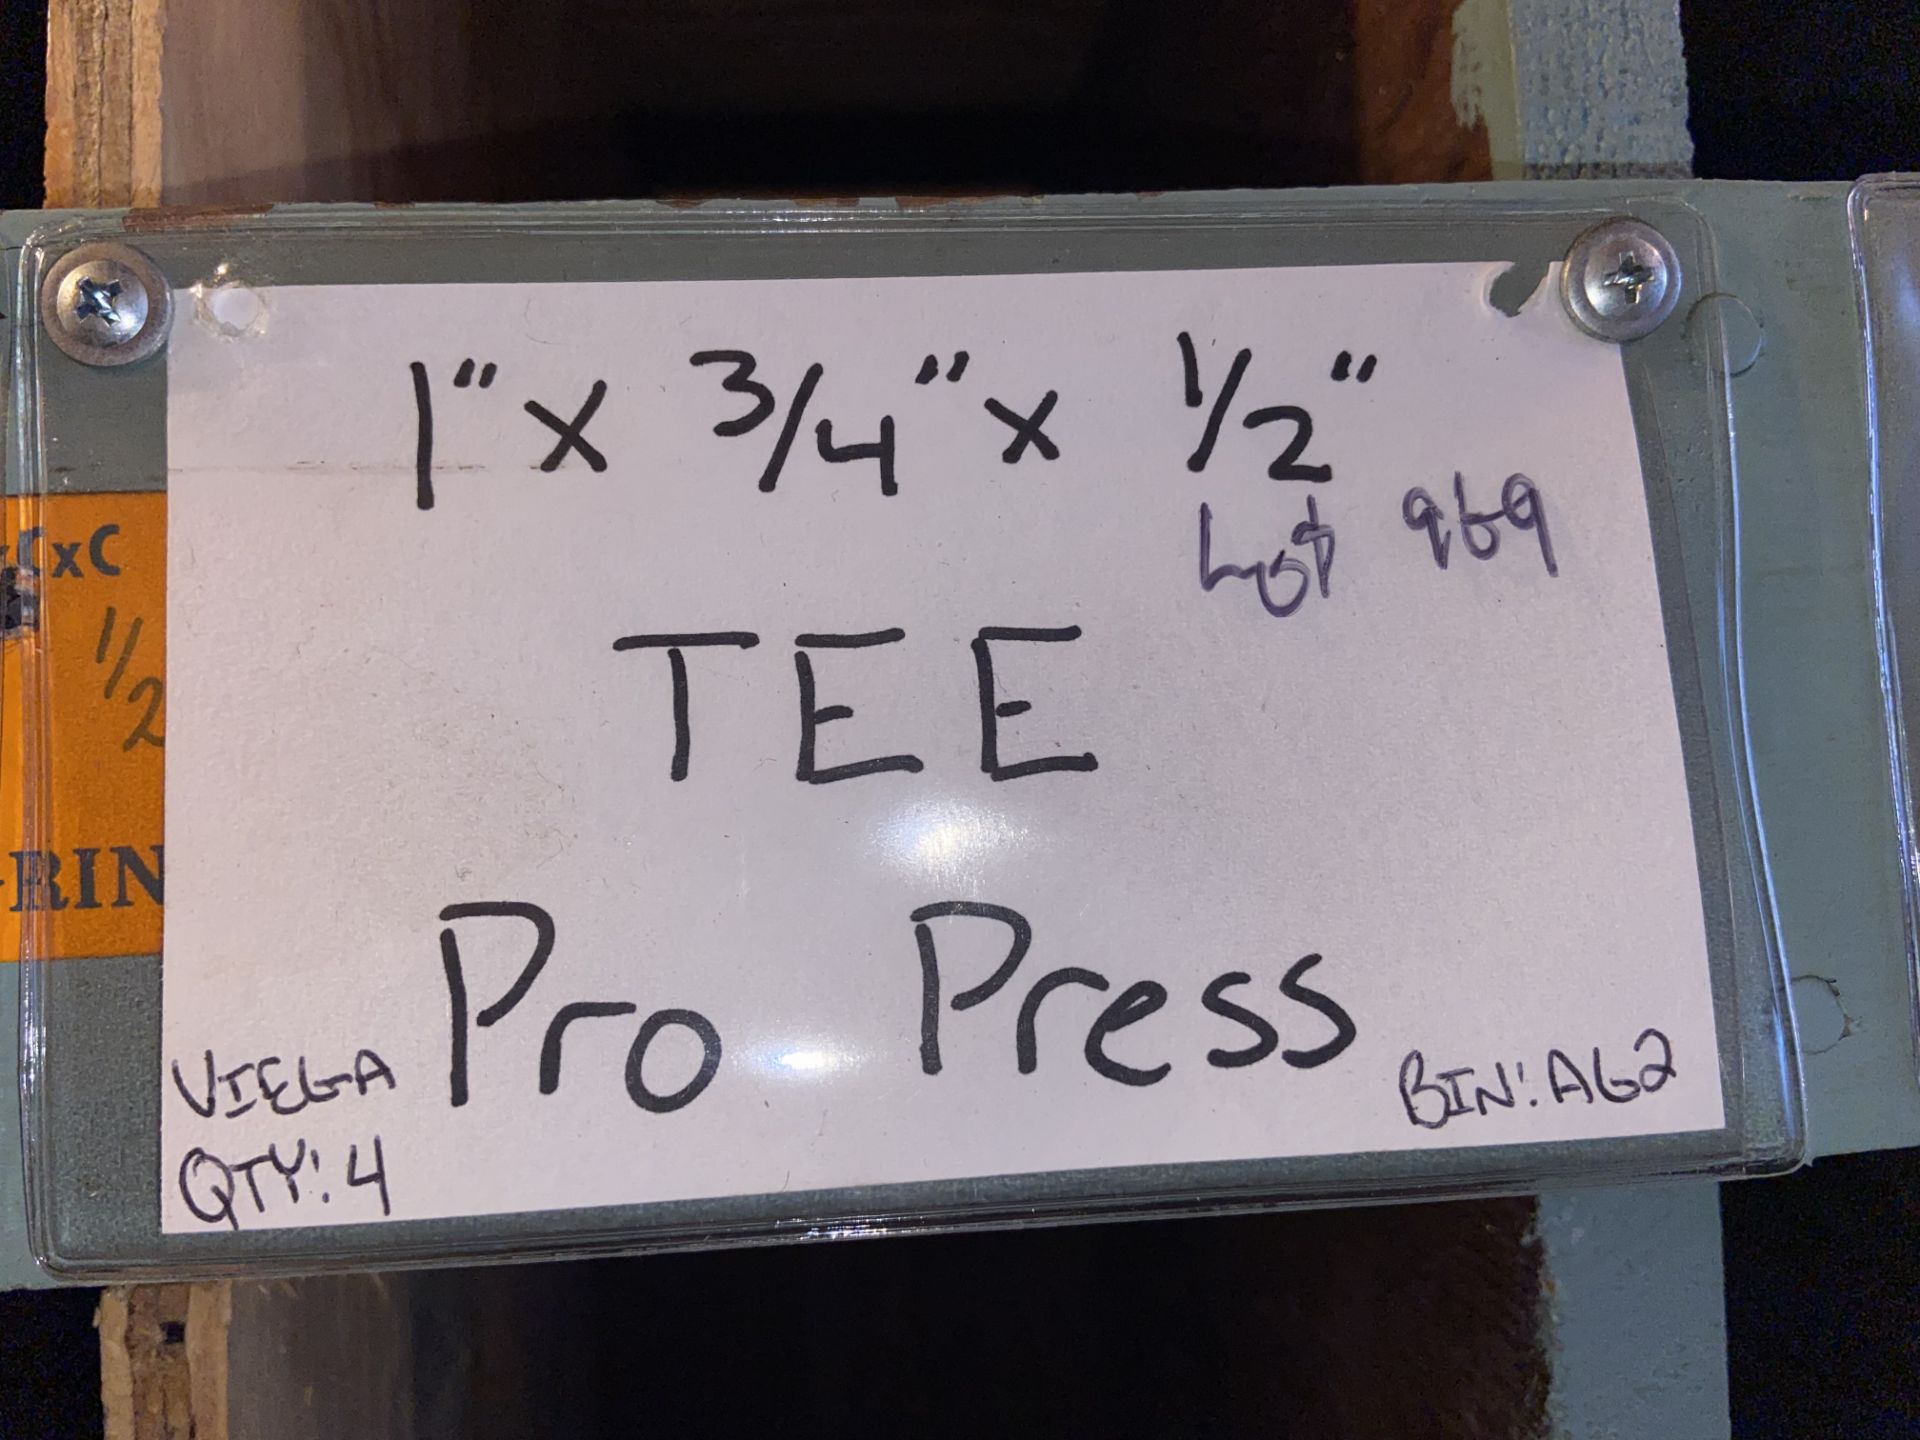 (1) VIEGA 2”x1 1/2” x 1 1/4” Tee Pro Press; (2) NIBCO 1 1/4” 1 1/4”x 1/2” Tee Pro Press; VIEGA (1) - Image 22 of 33